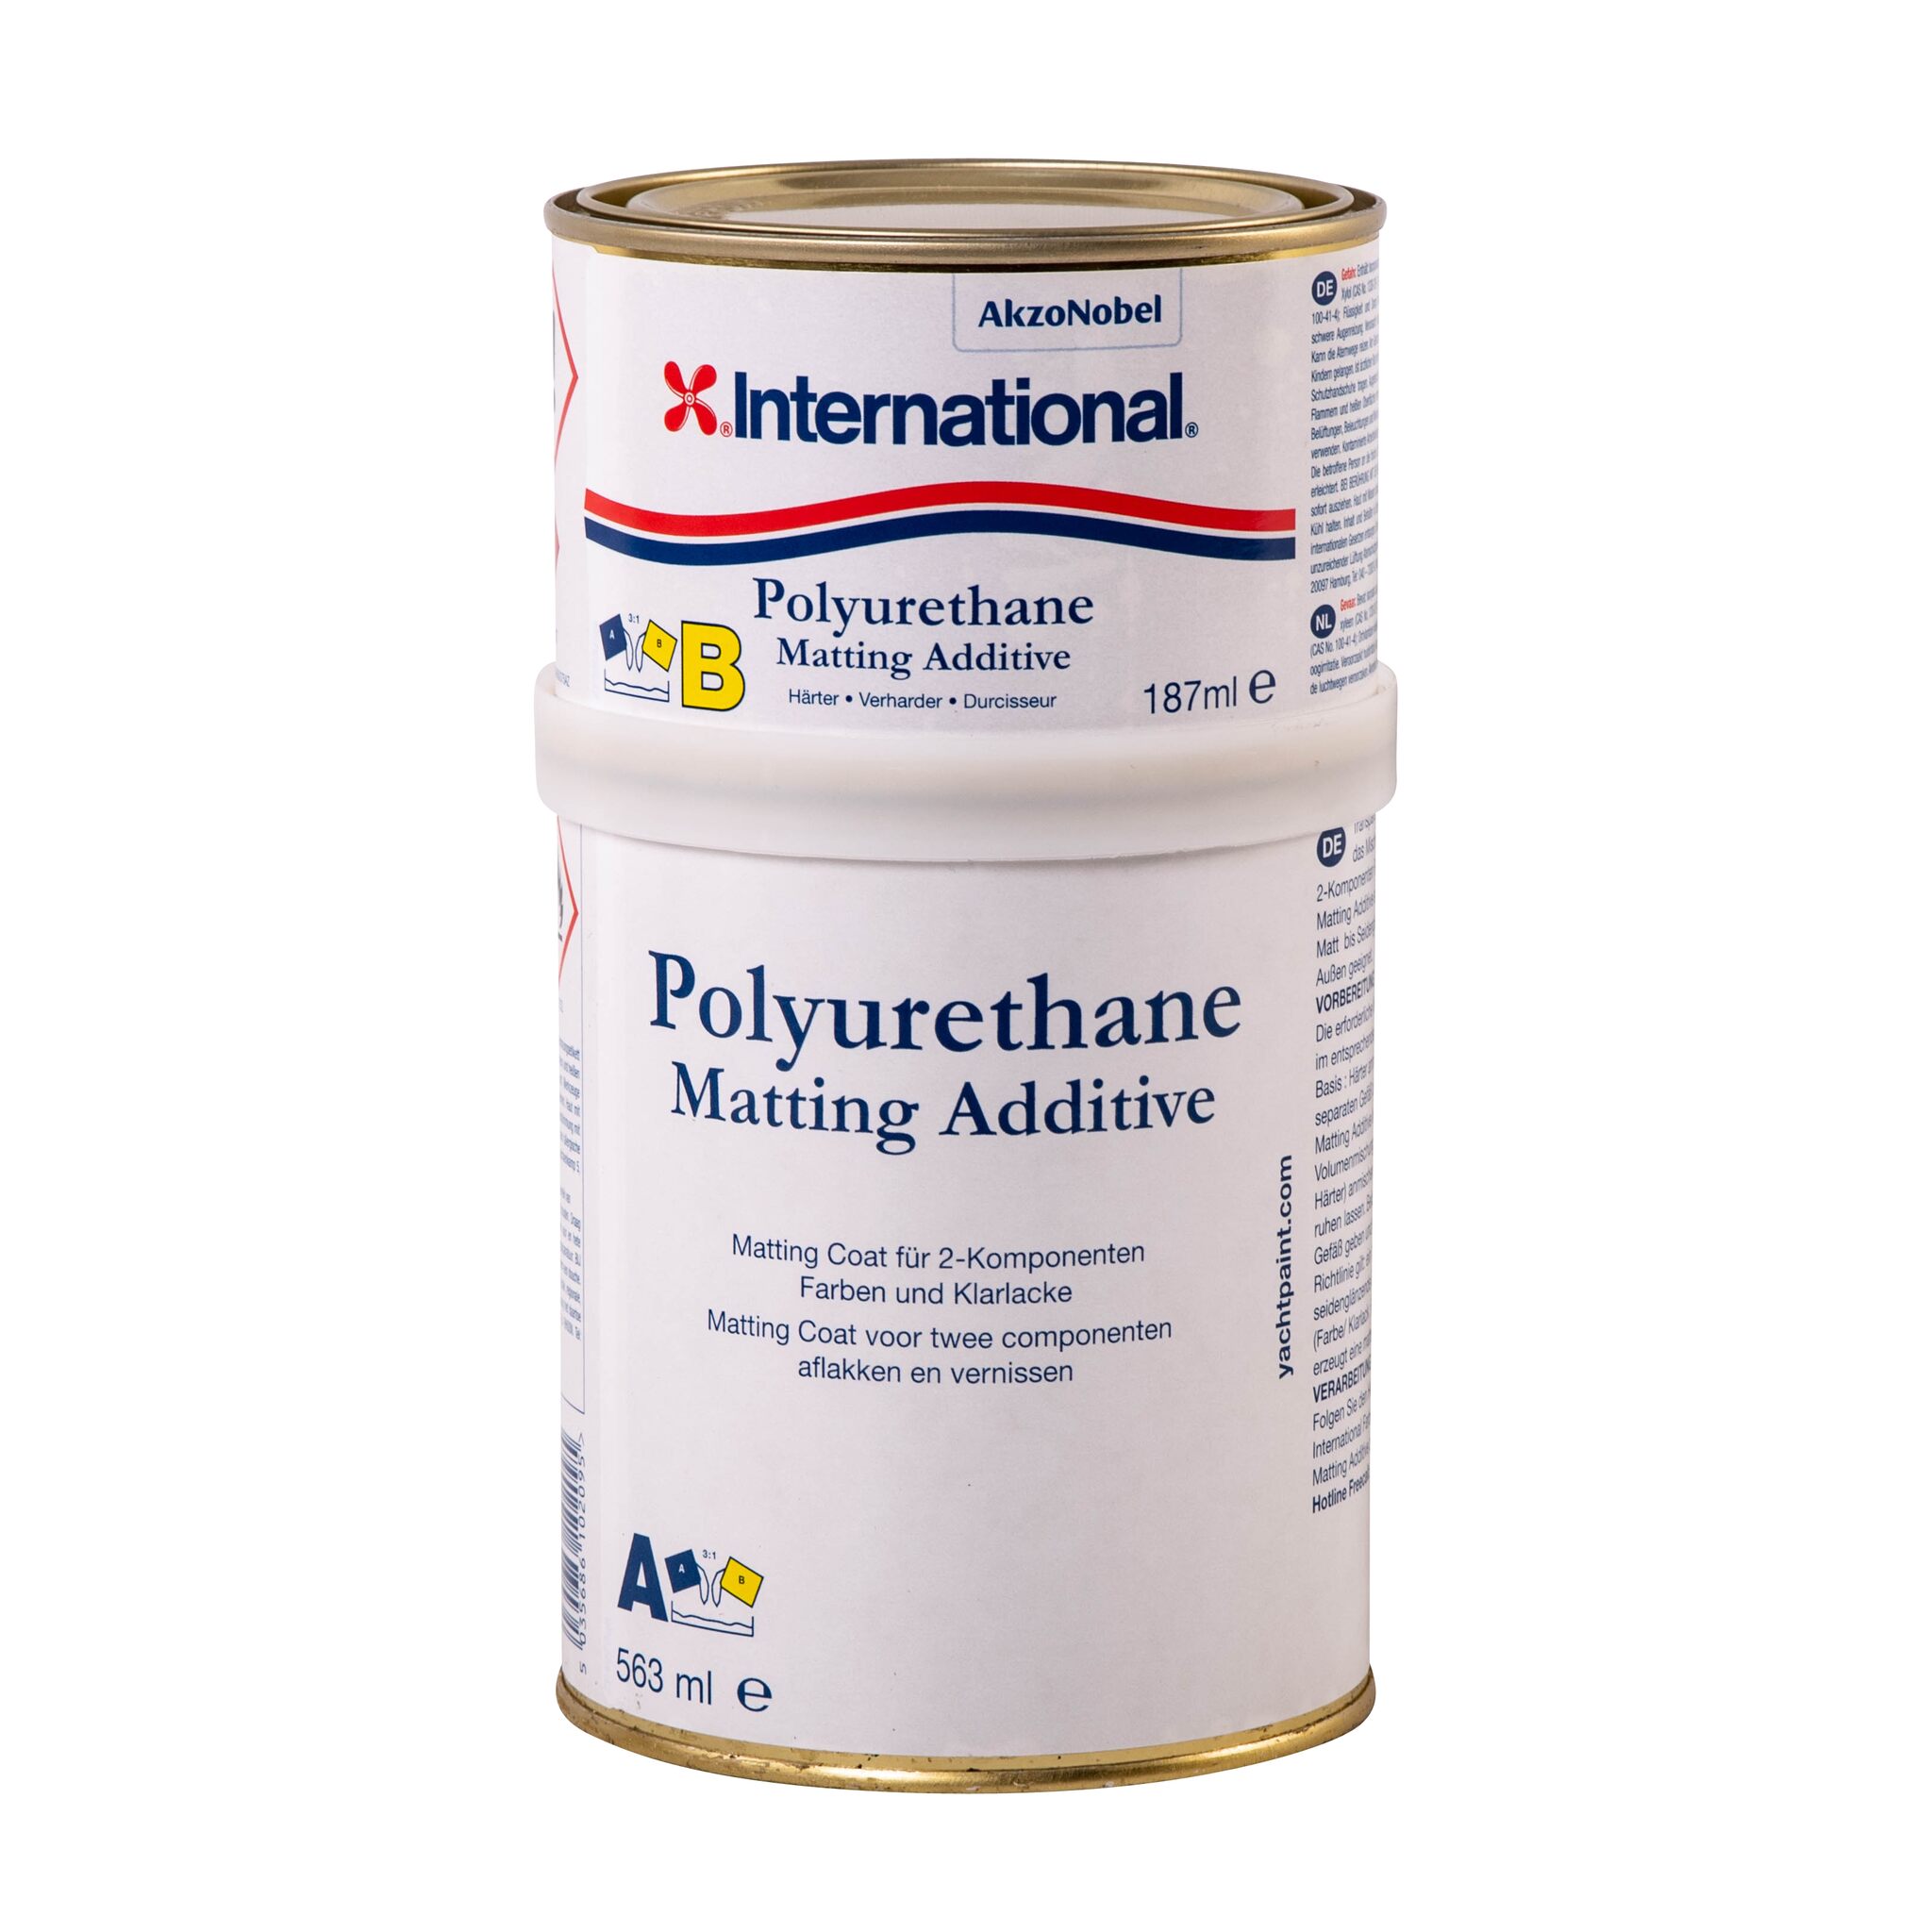 International Polyurethane Matting Additive, 2-Component Varnish